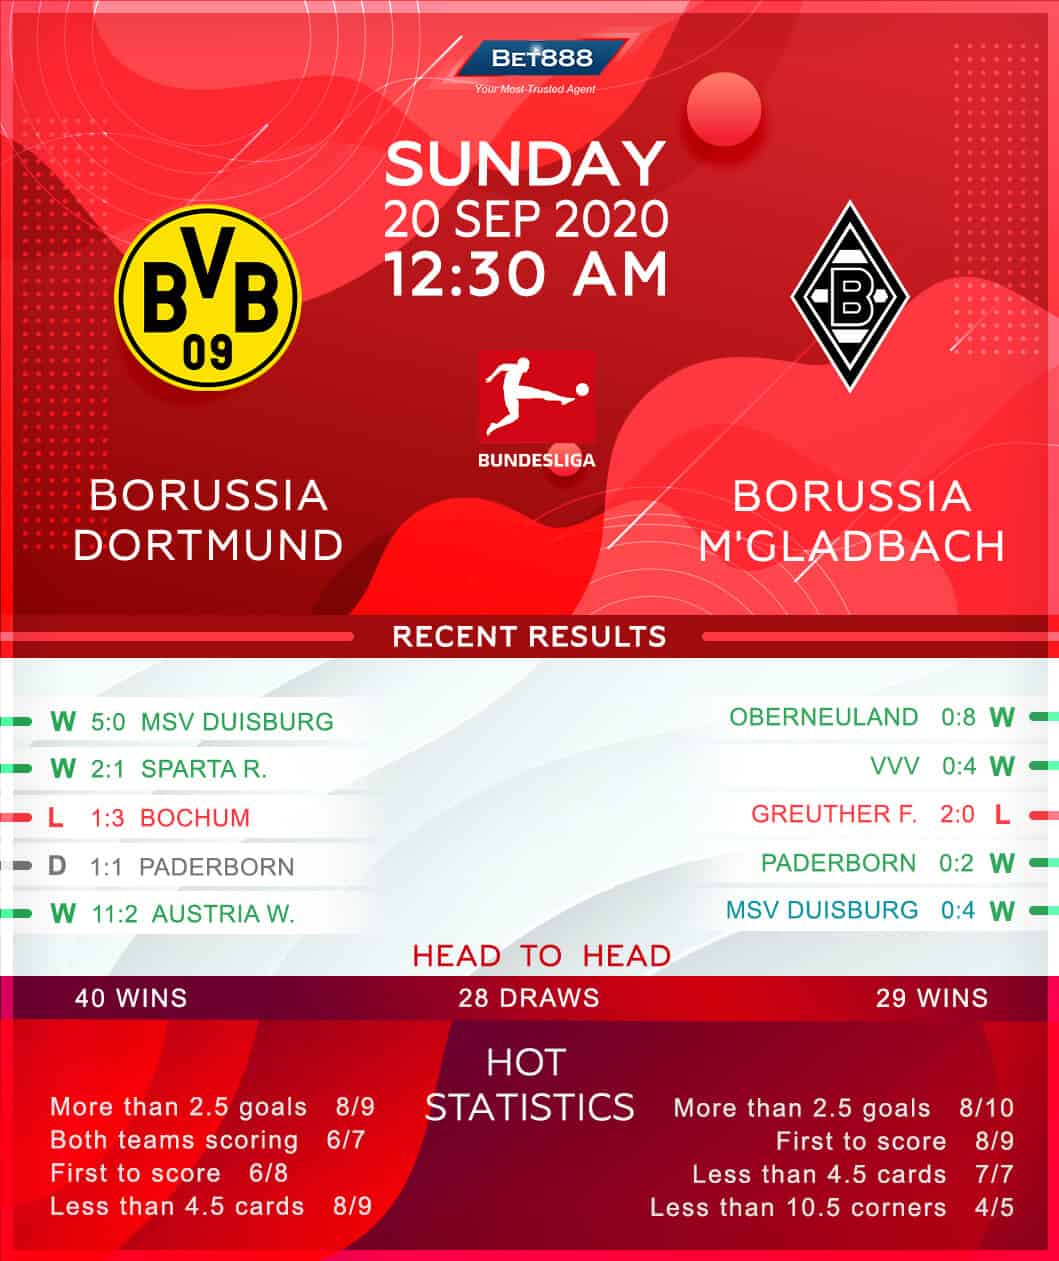 Borussia Dortmund vs Borussia Mönchengladbach 20/09/20